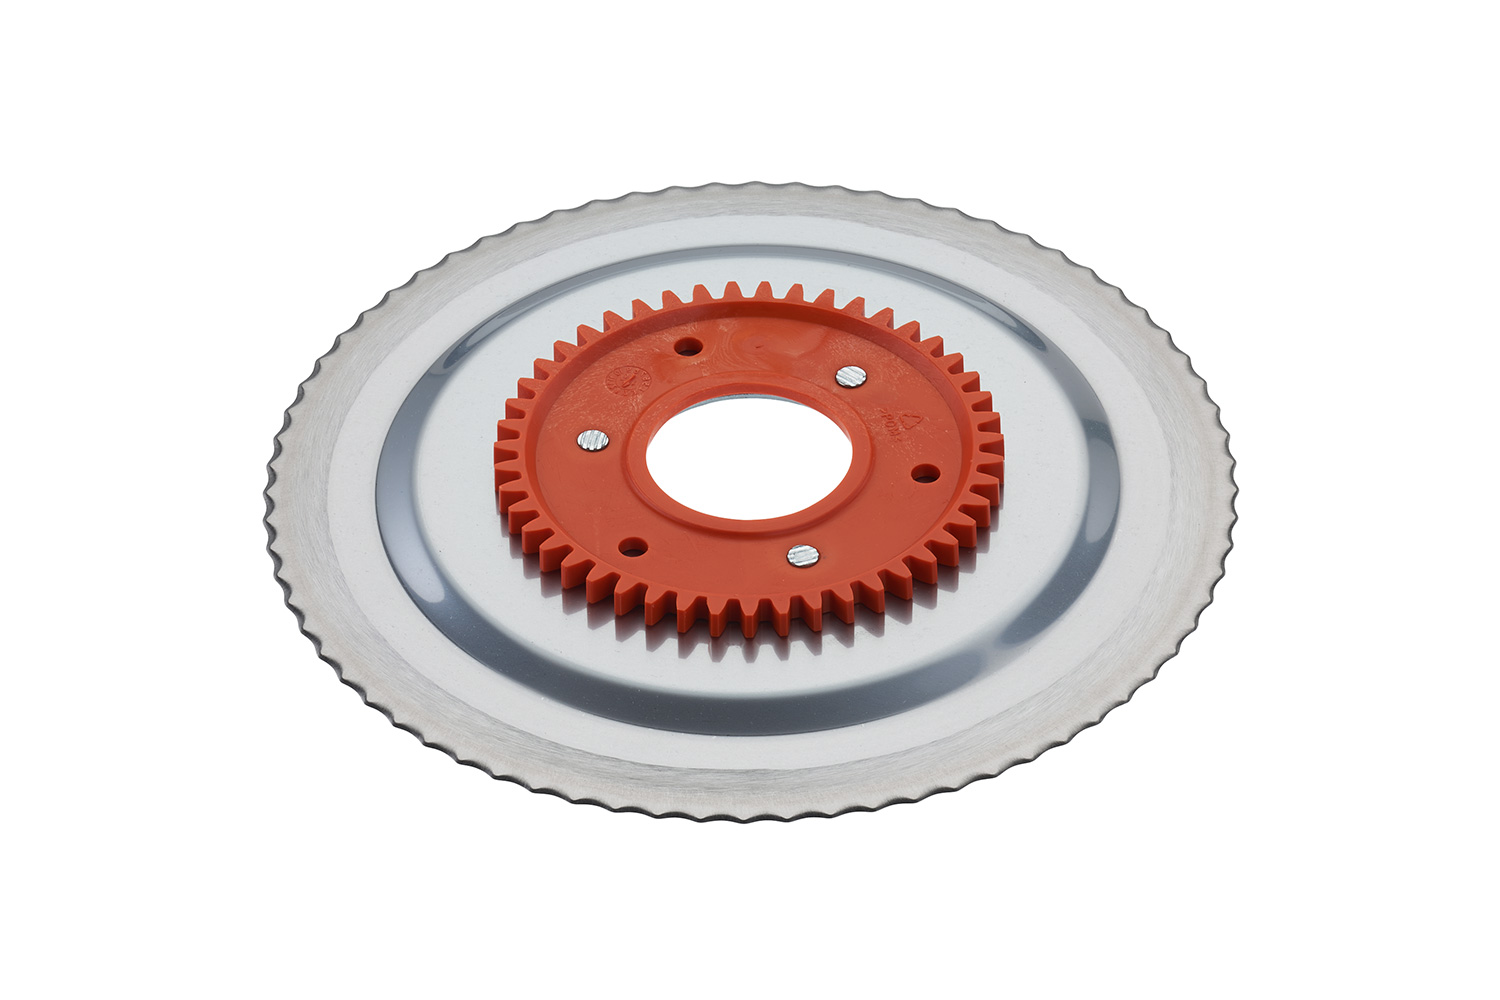 Standard serrated circular blade with an orange gear